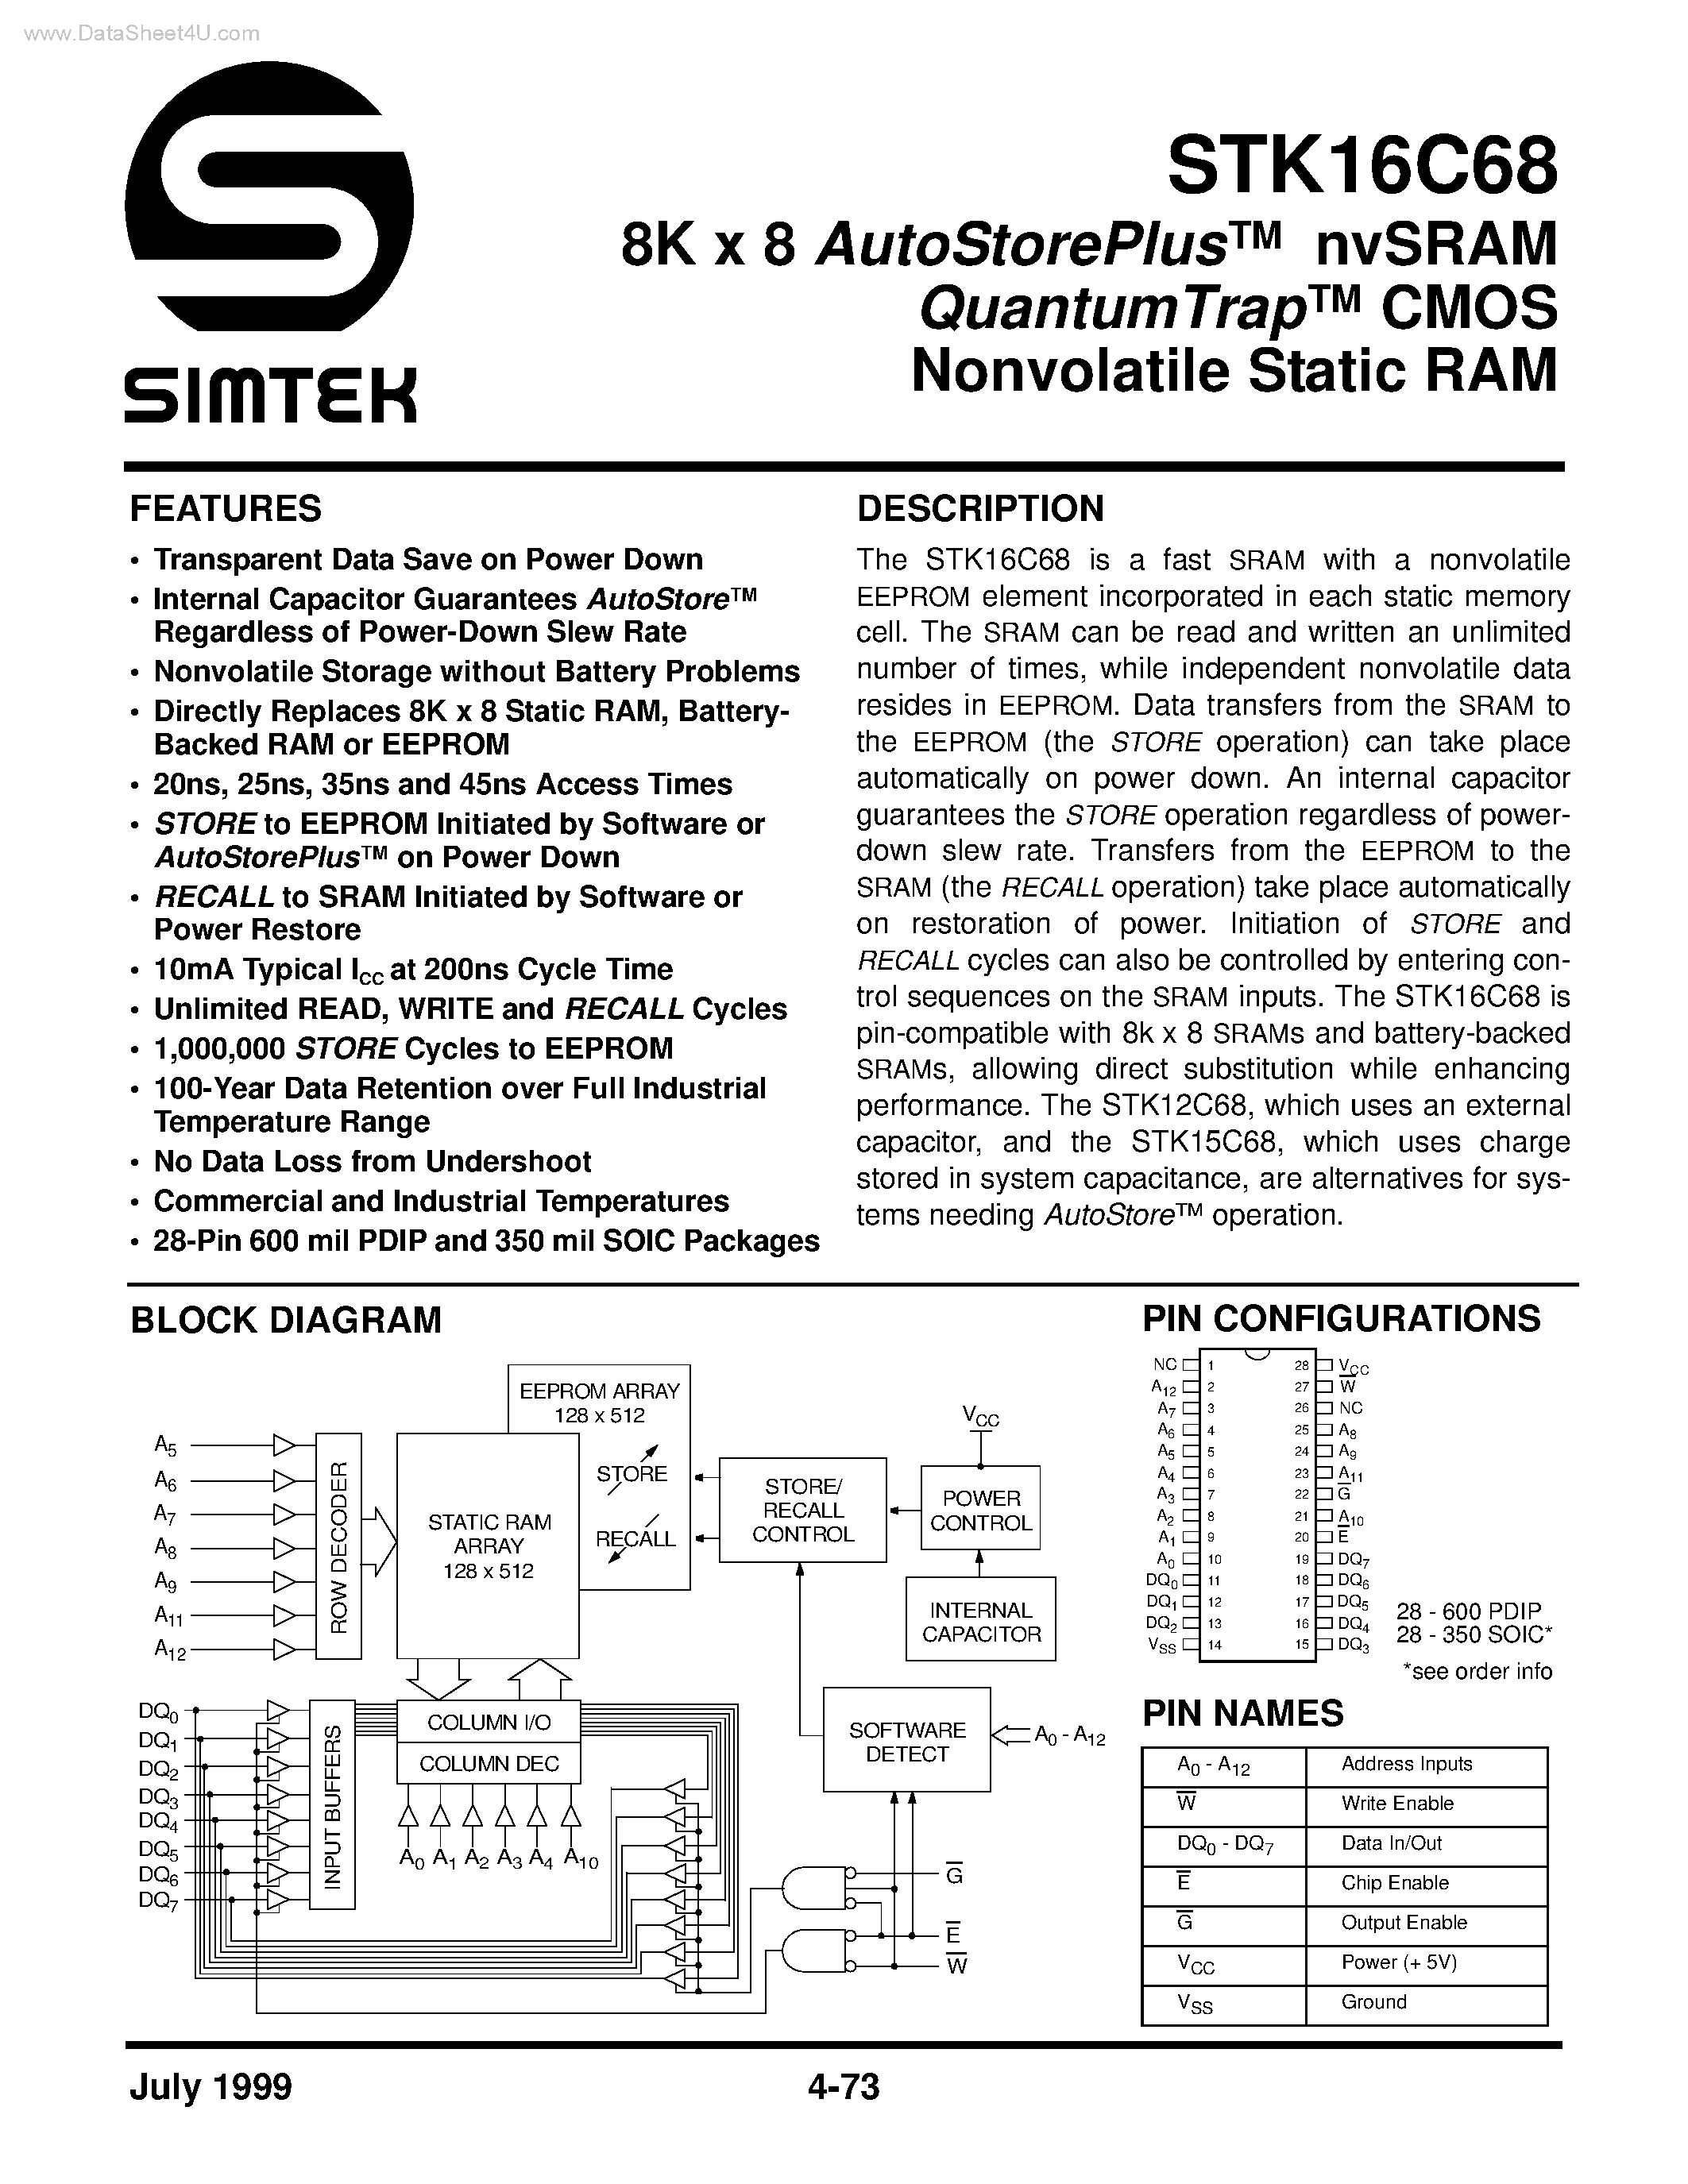 Даташит STK16C68 - CMOS Nonvolatile Static RAM страница 1